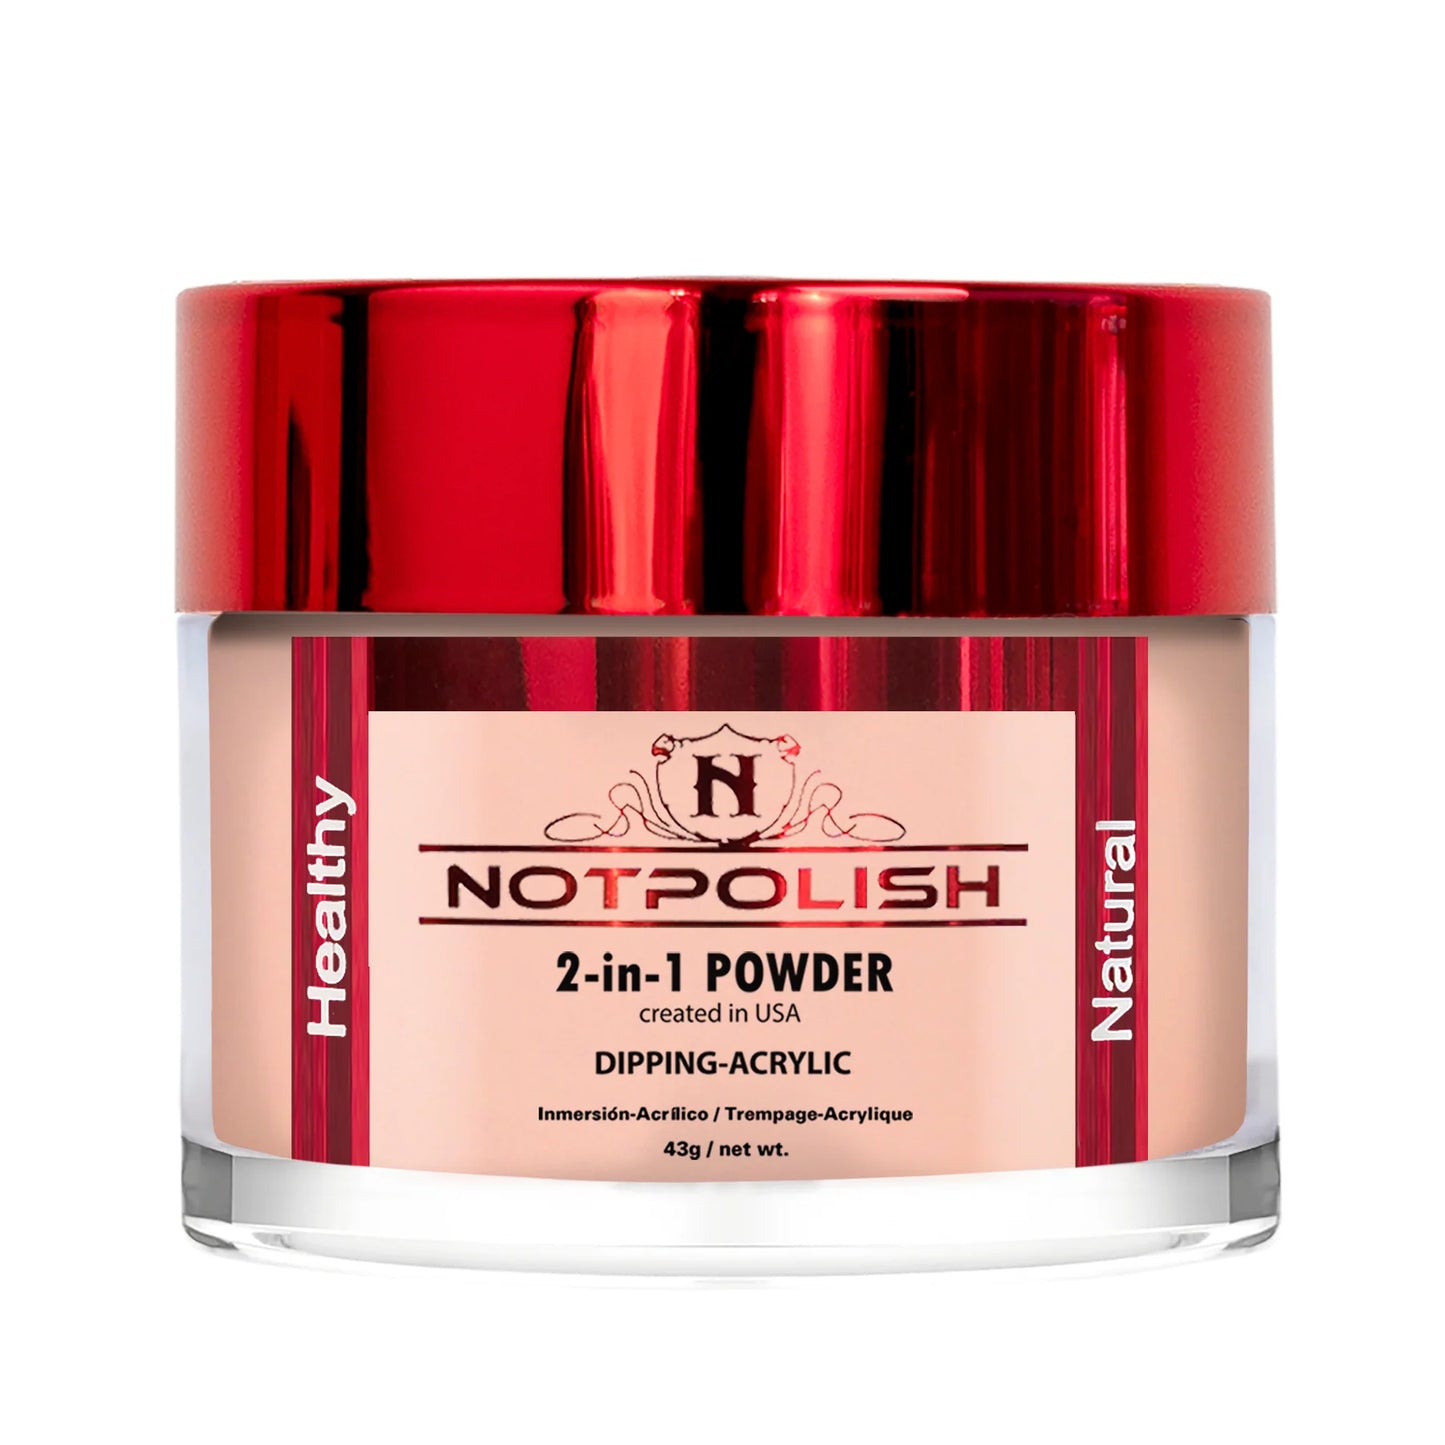 NotPolish - Nail Acrylic/Dip Powder | OG Collection | OG102 Nude Panther 2oz Jar